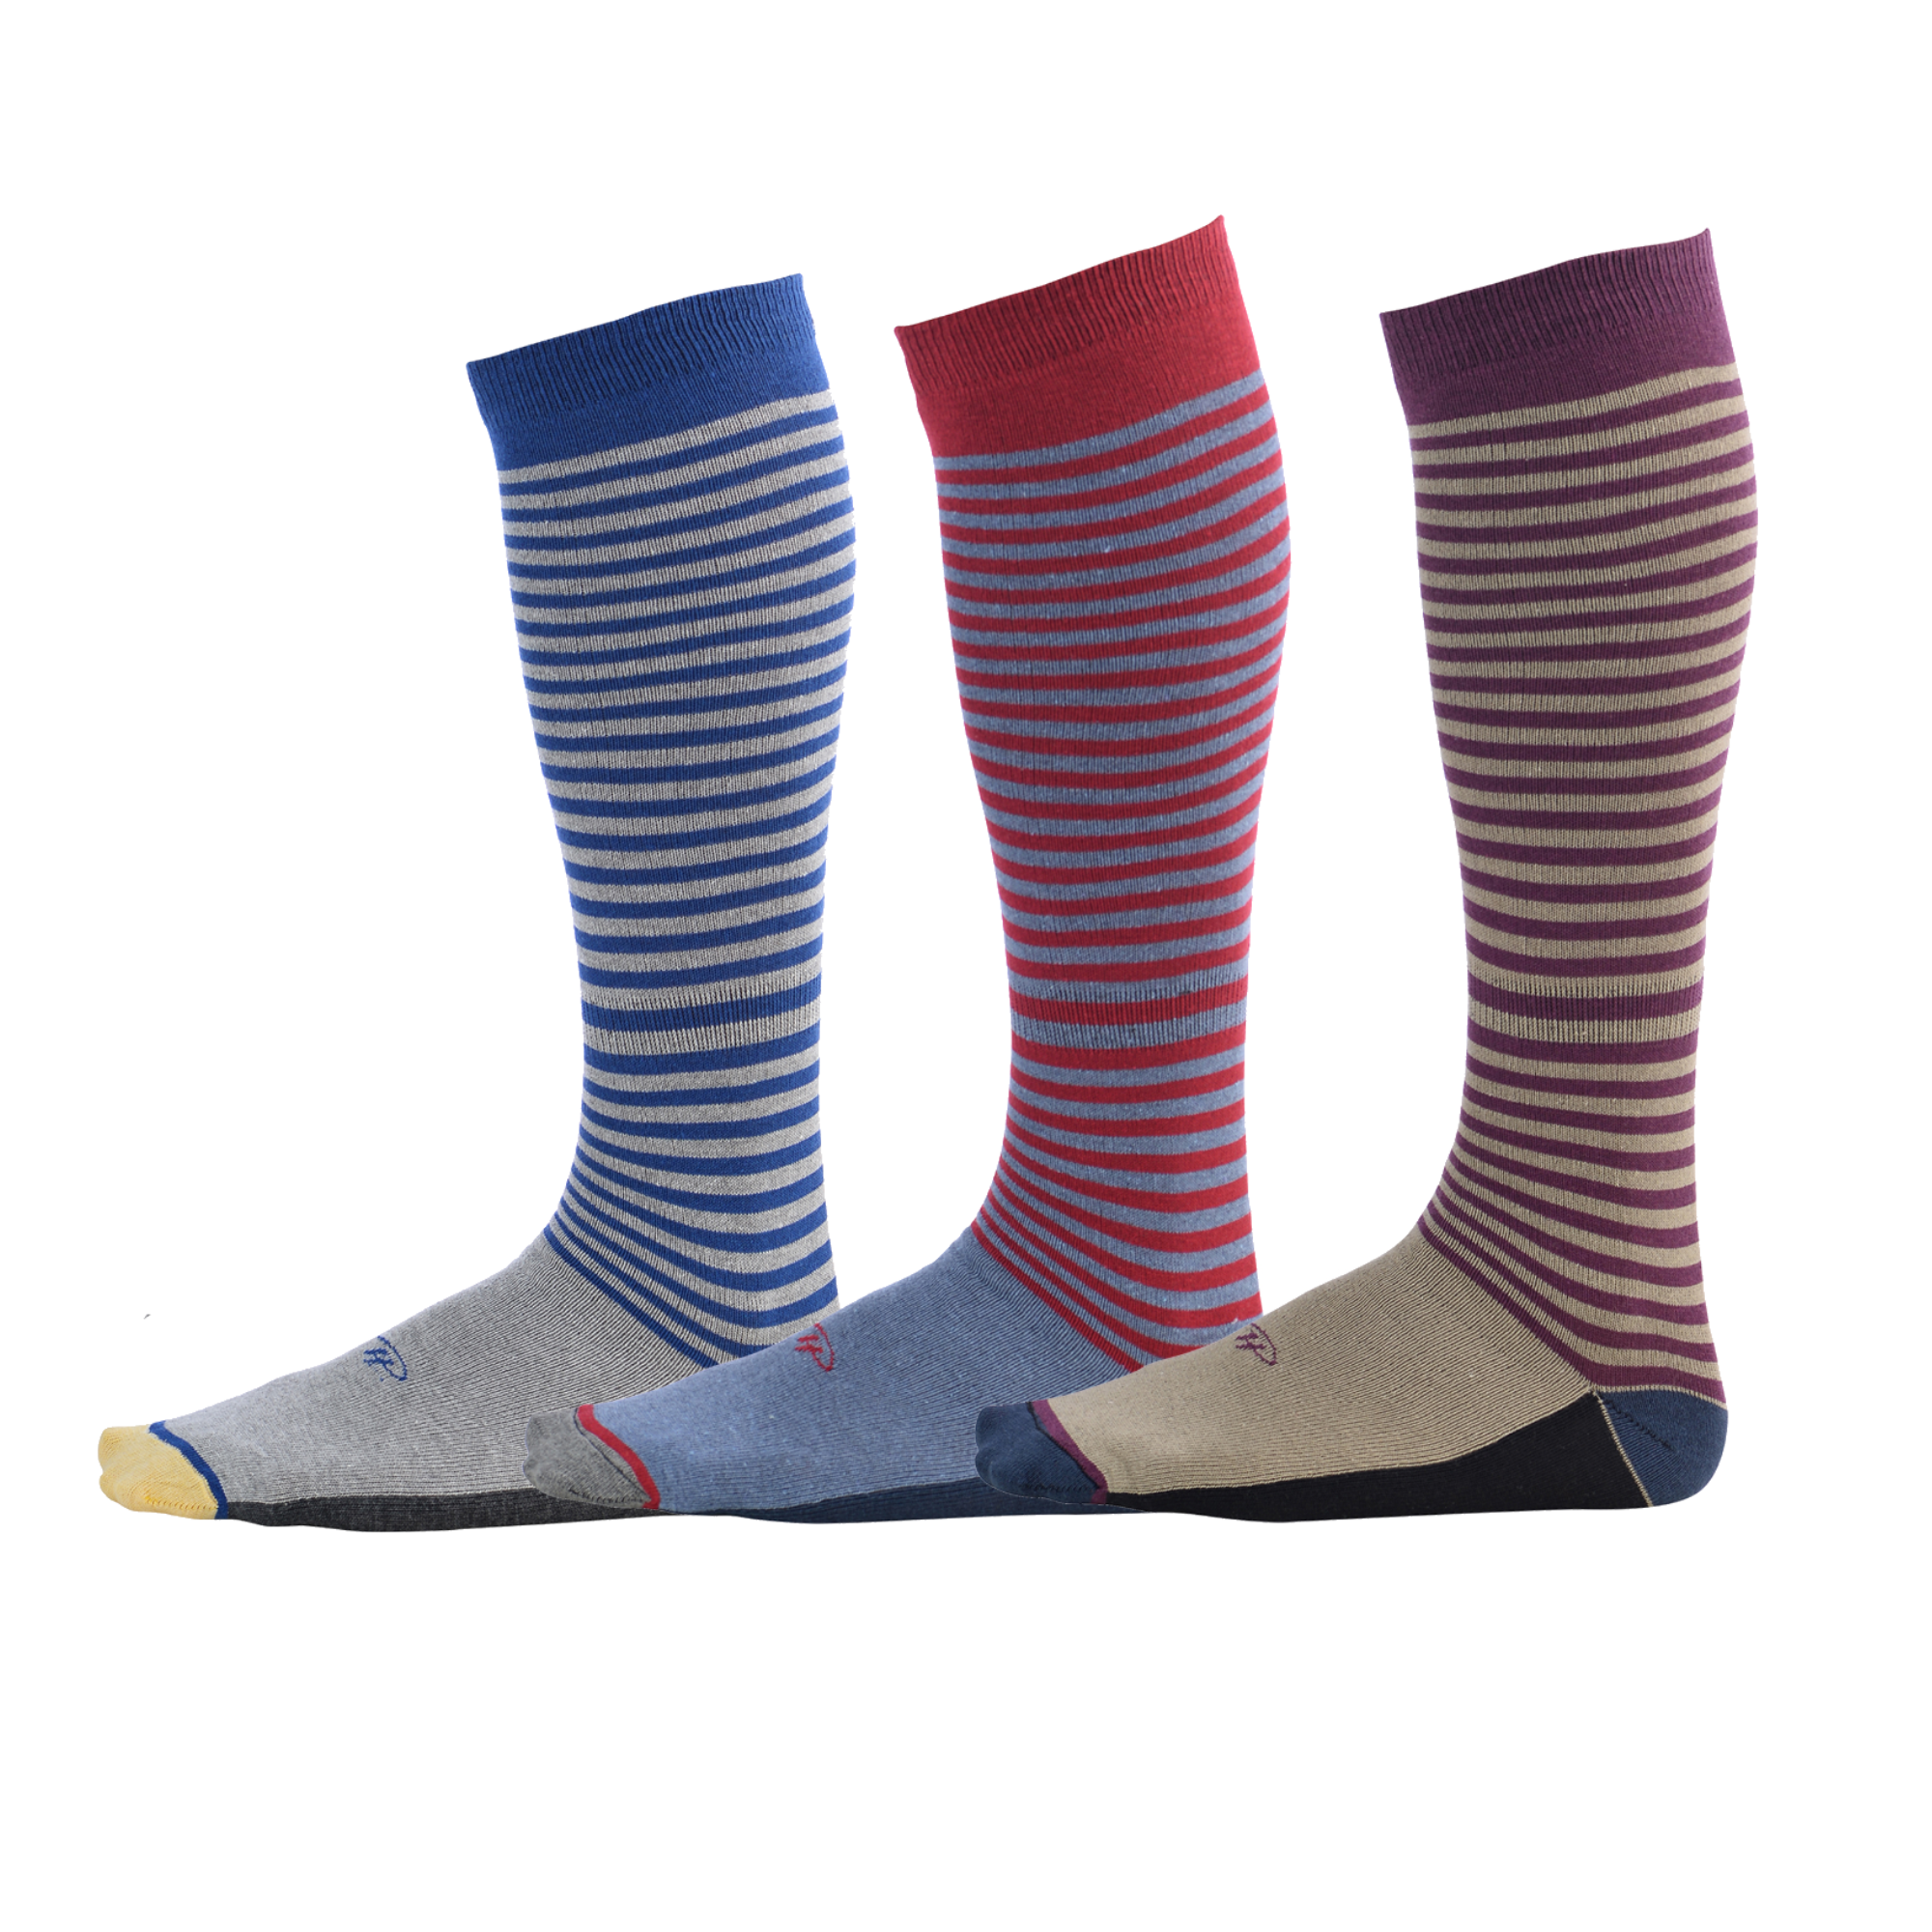 light grey dress socks with blue stripes, light blue dress socks with red stripes, beige dress socks with burgundy stripes